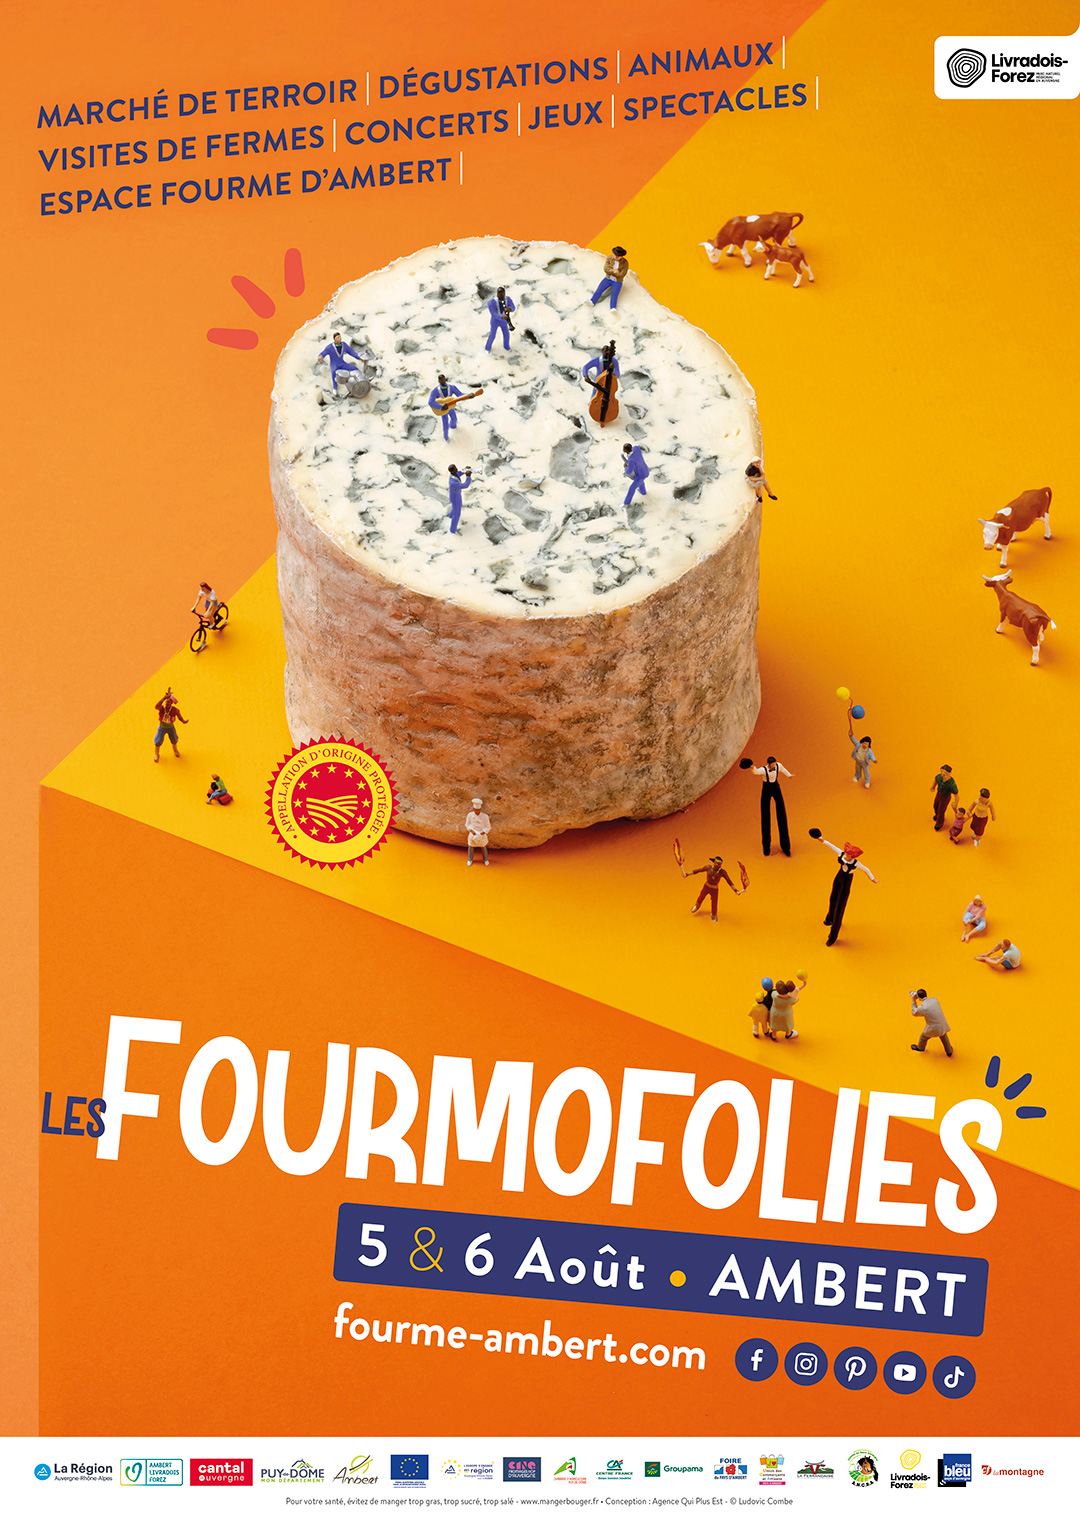 Les Fourmofolies